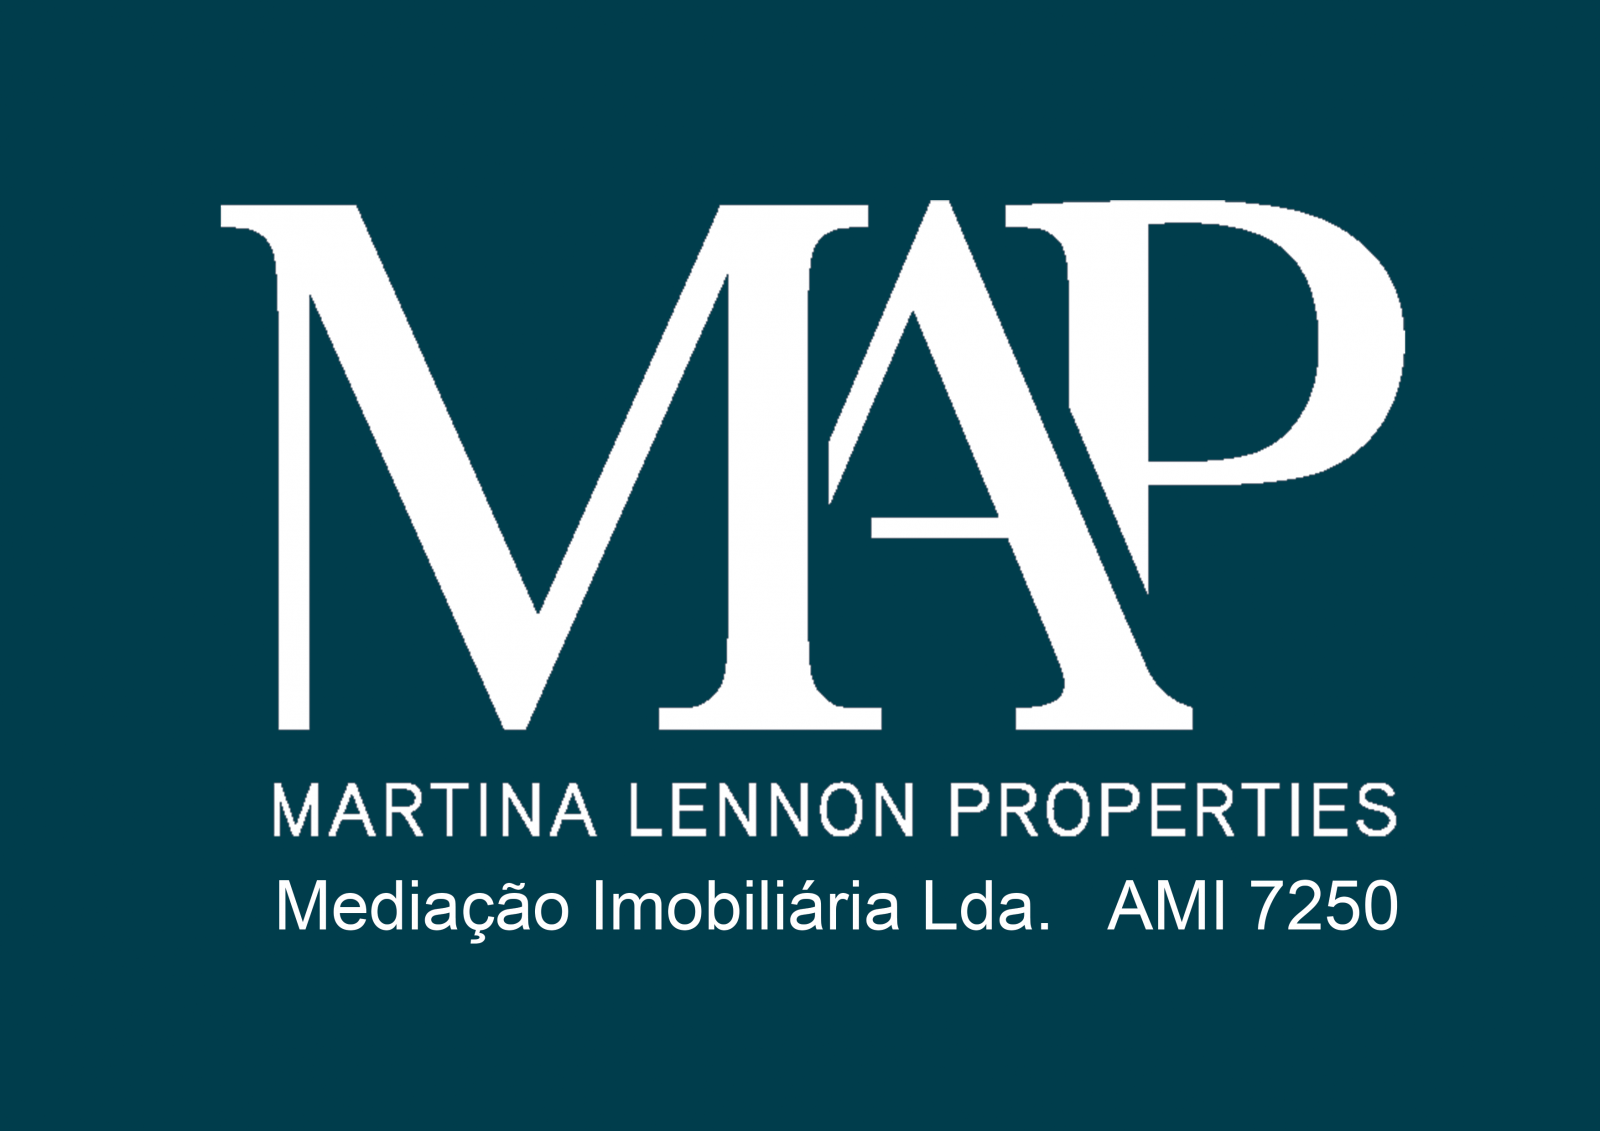 Martina Lennon Properties, MI, Lda